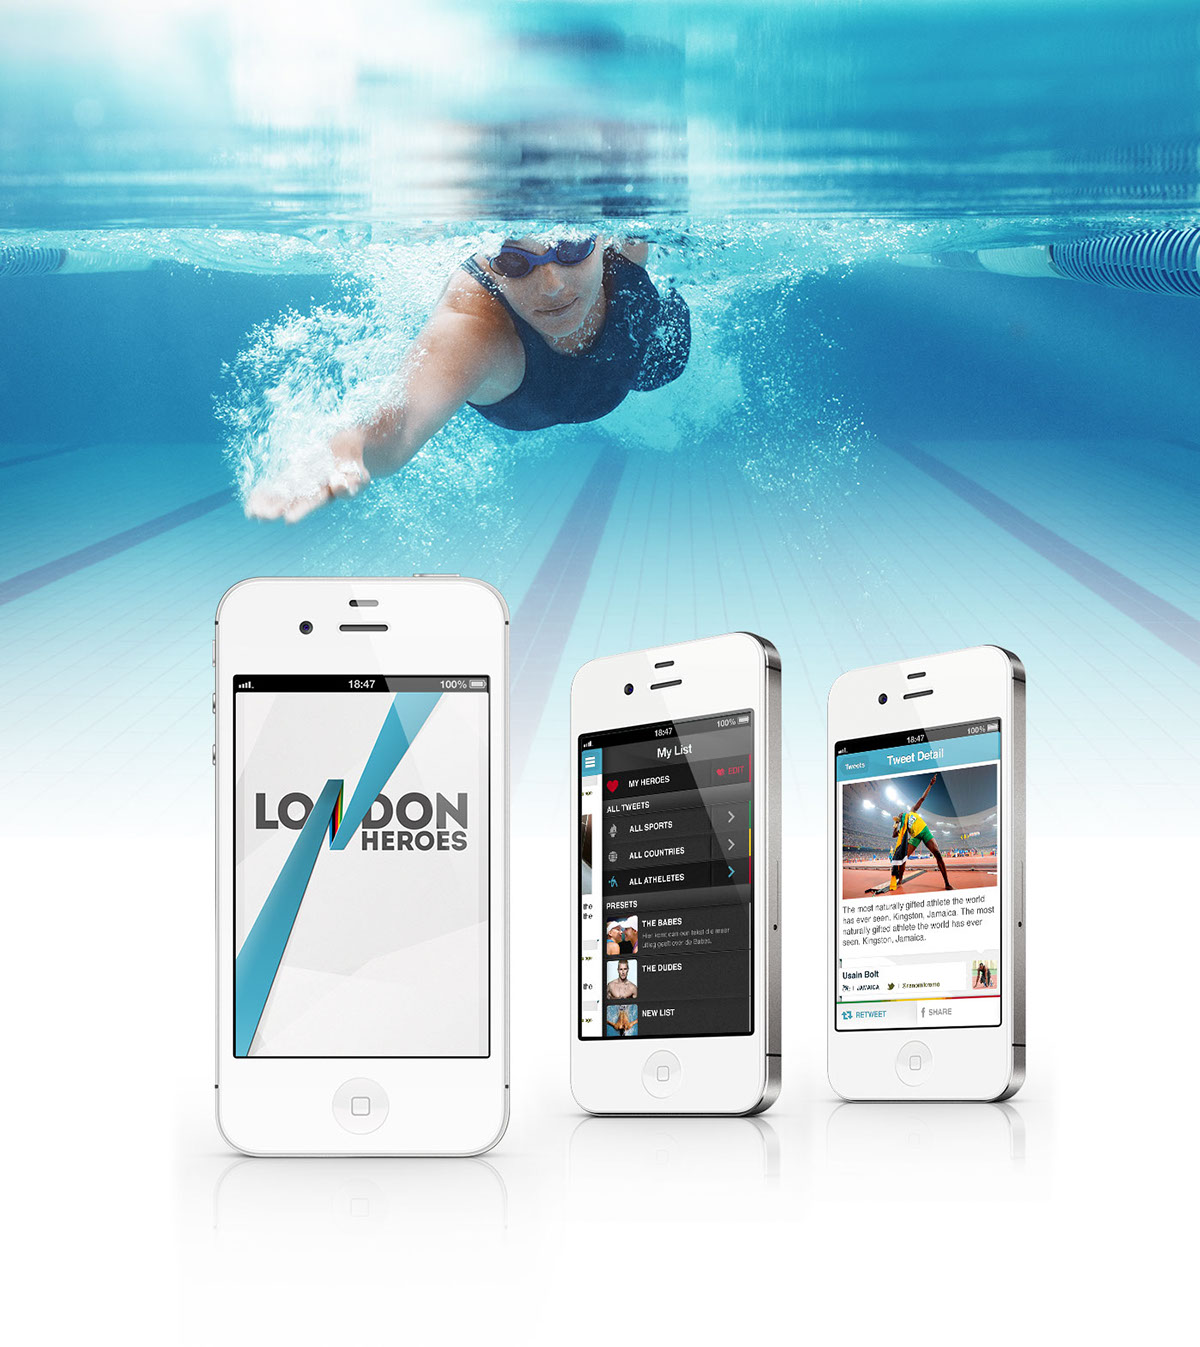 mobile app in10 Rotterdam London heroes